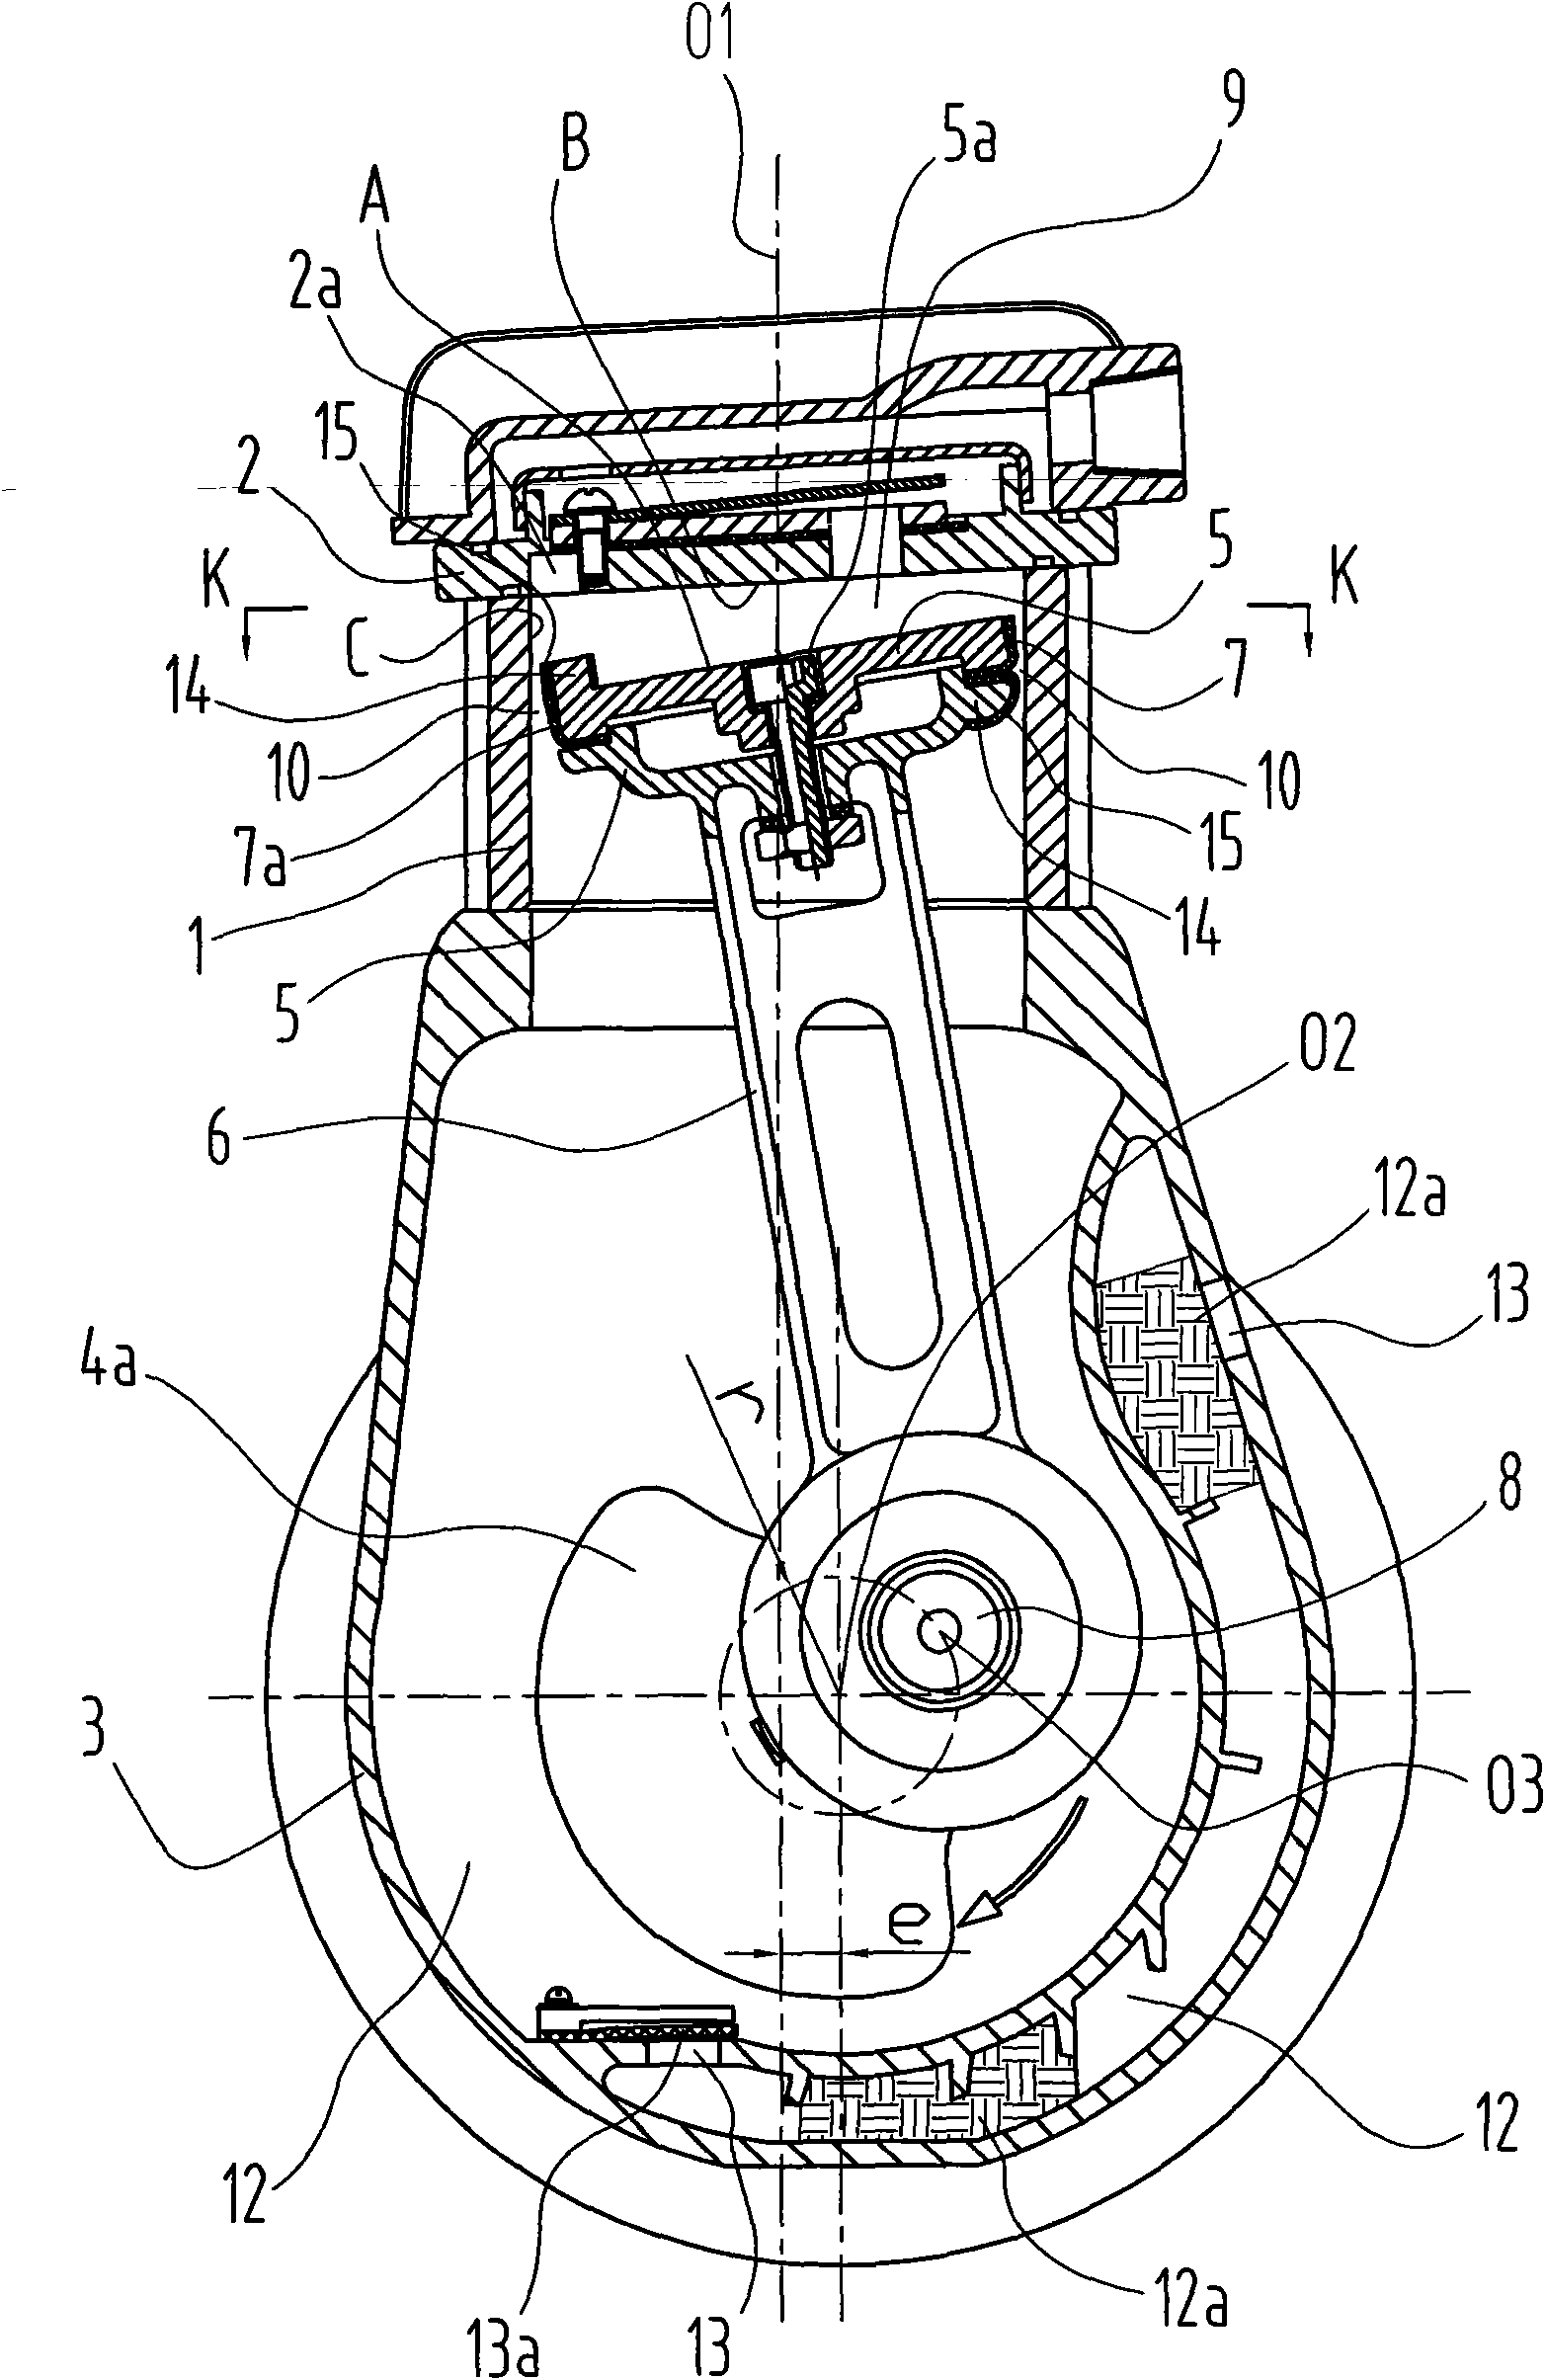 Piston valve air suction non-lubricated air compressor